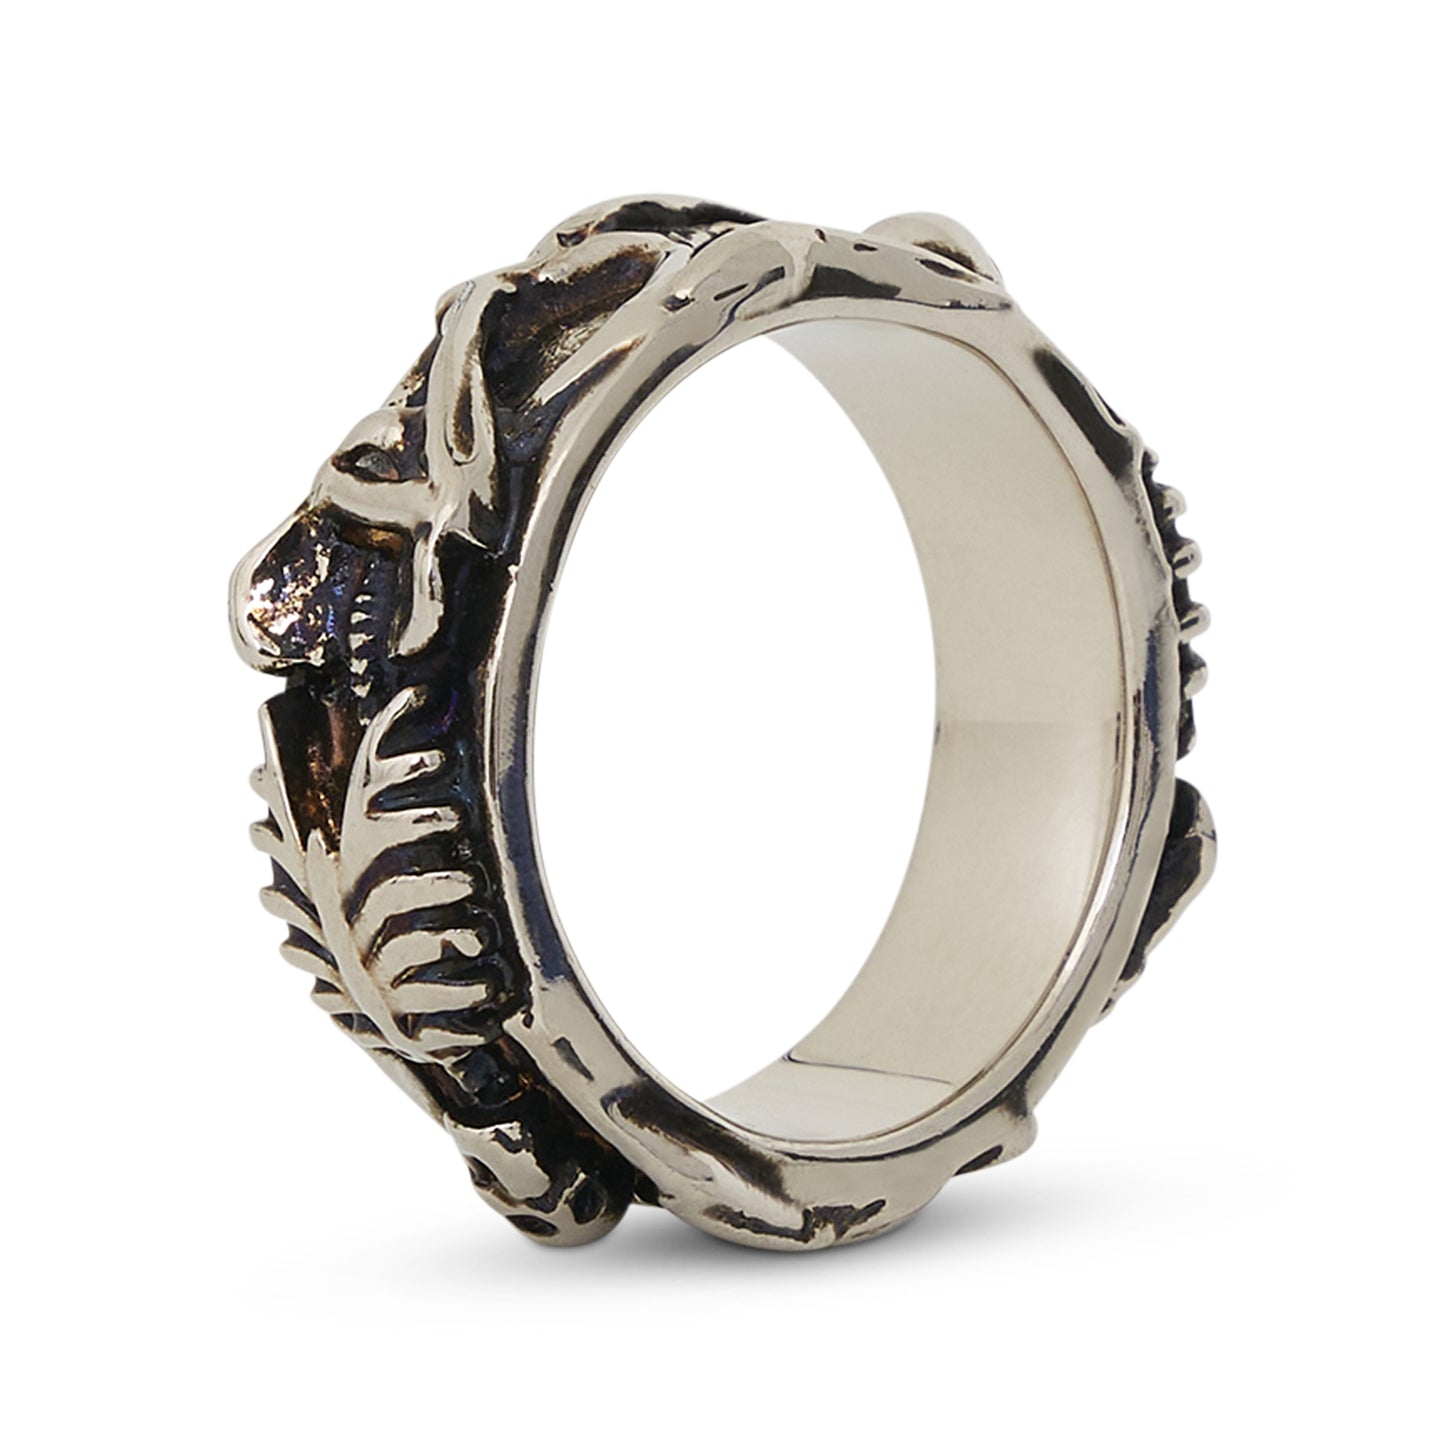 Dancing Skeleton Ring in Silver